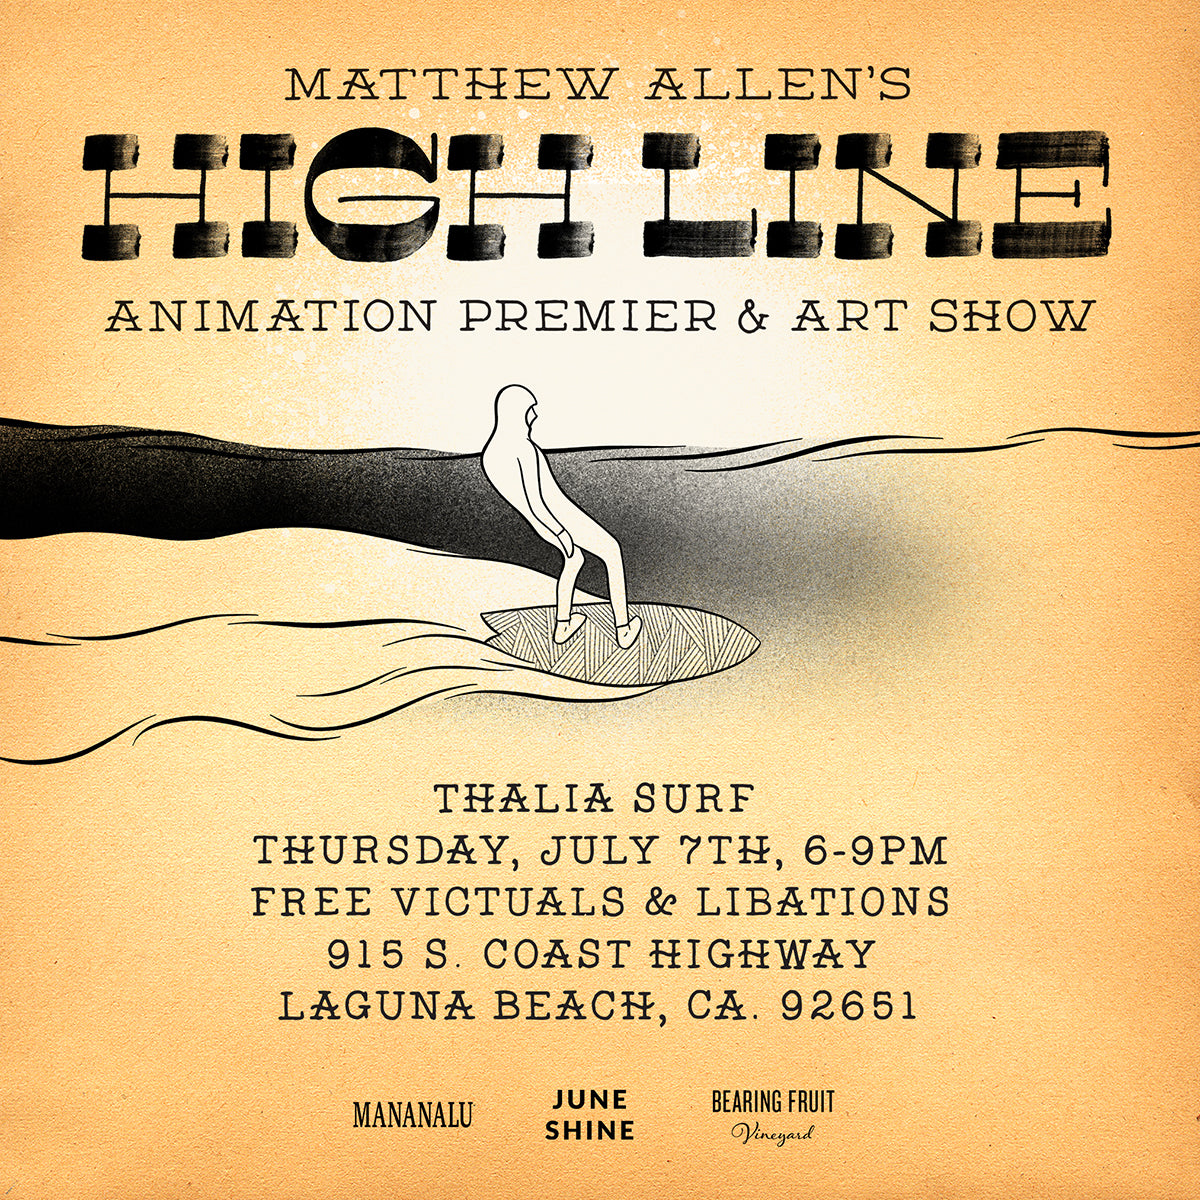 Matthew Allen's "High Line" Animation Premier and Art Show